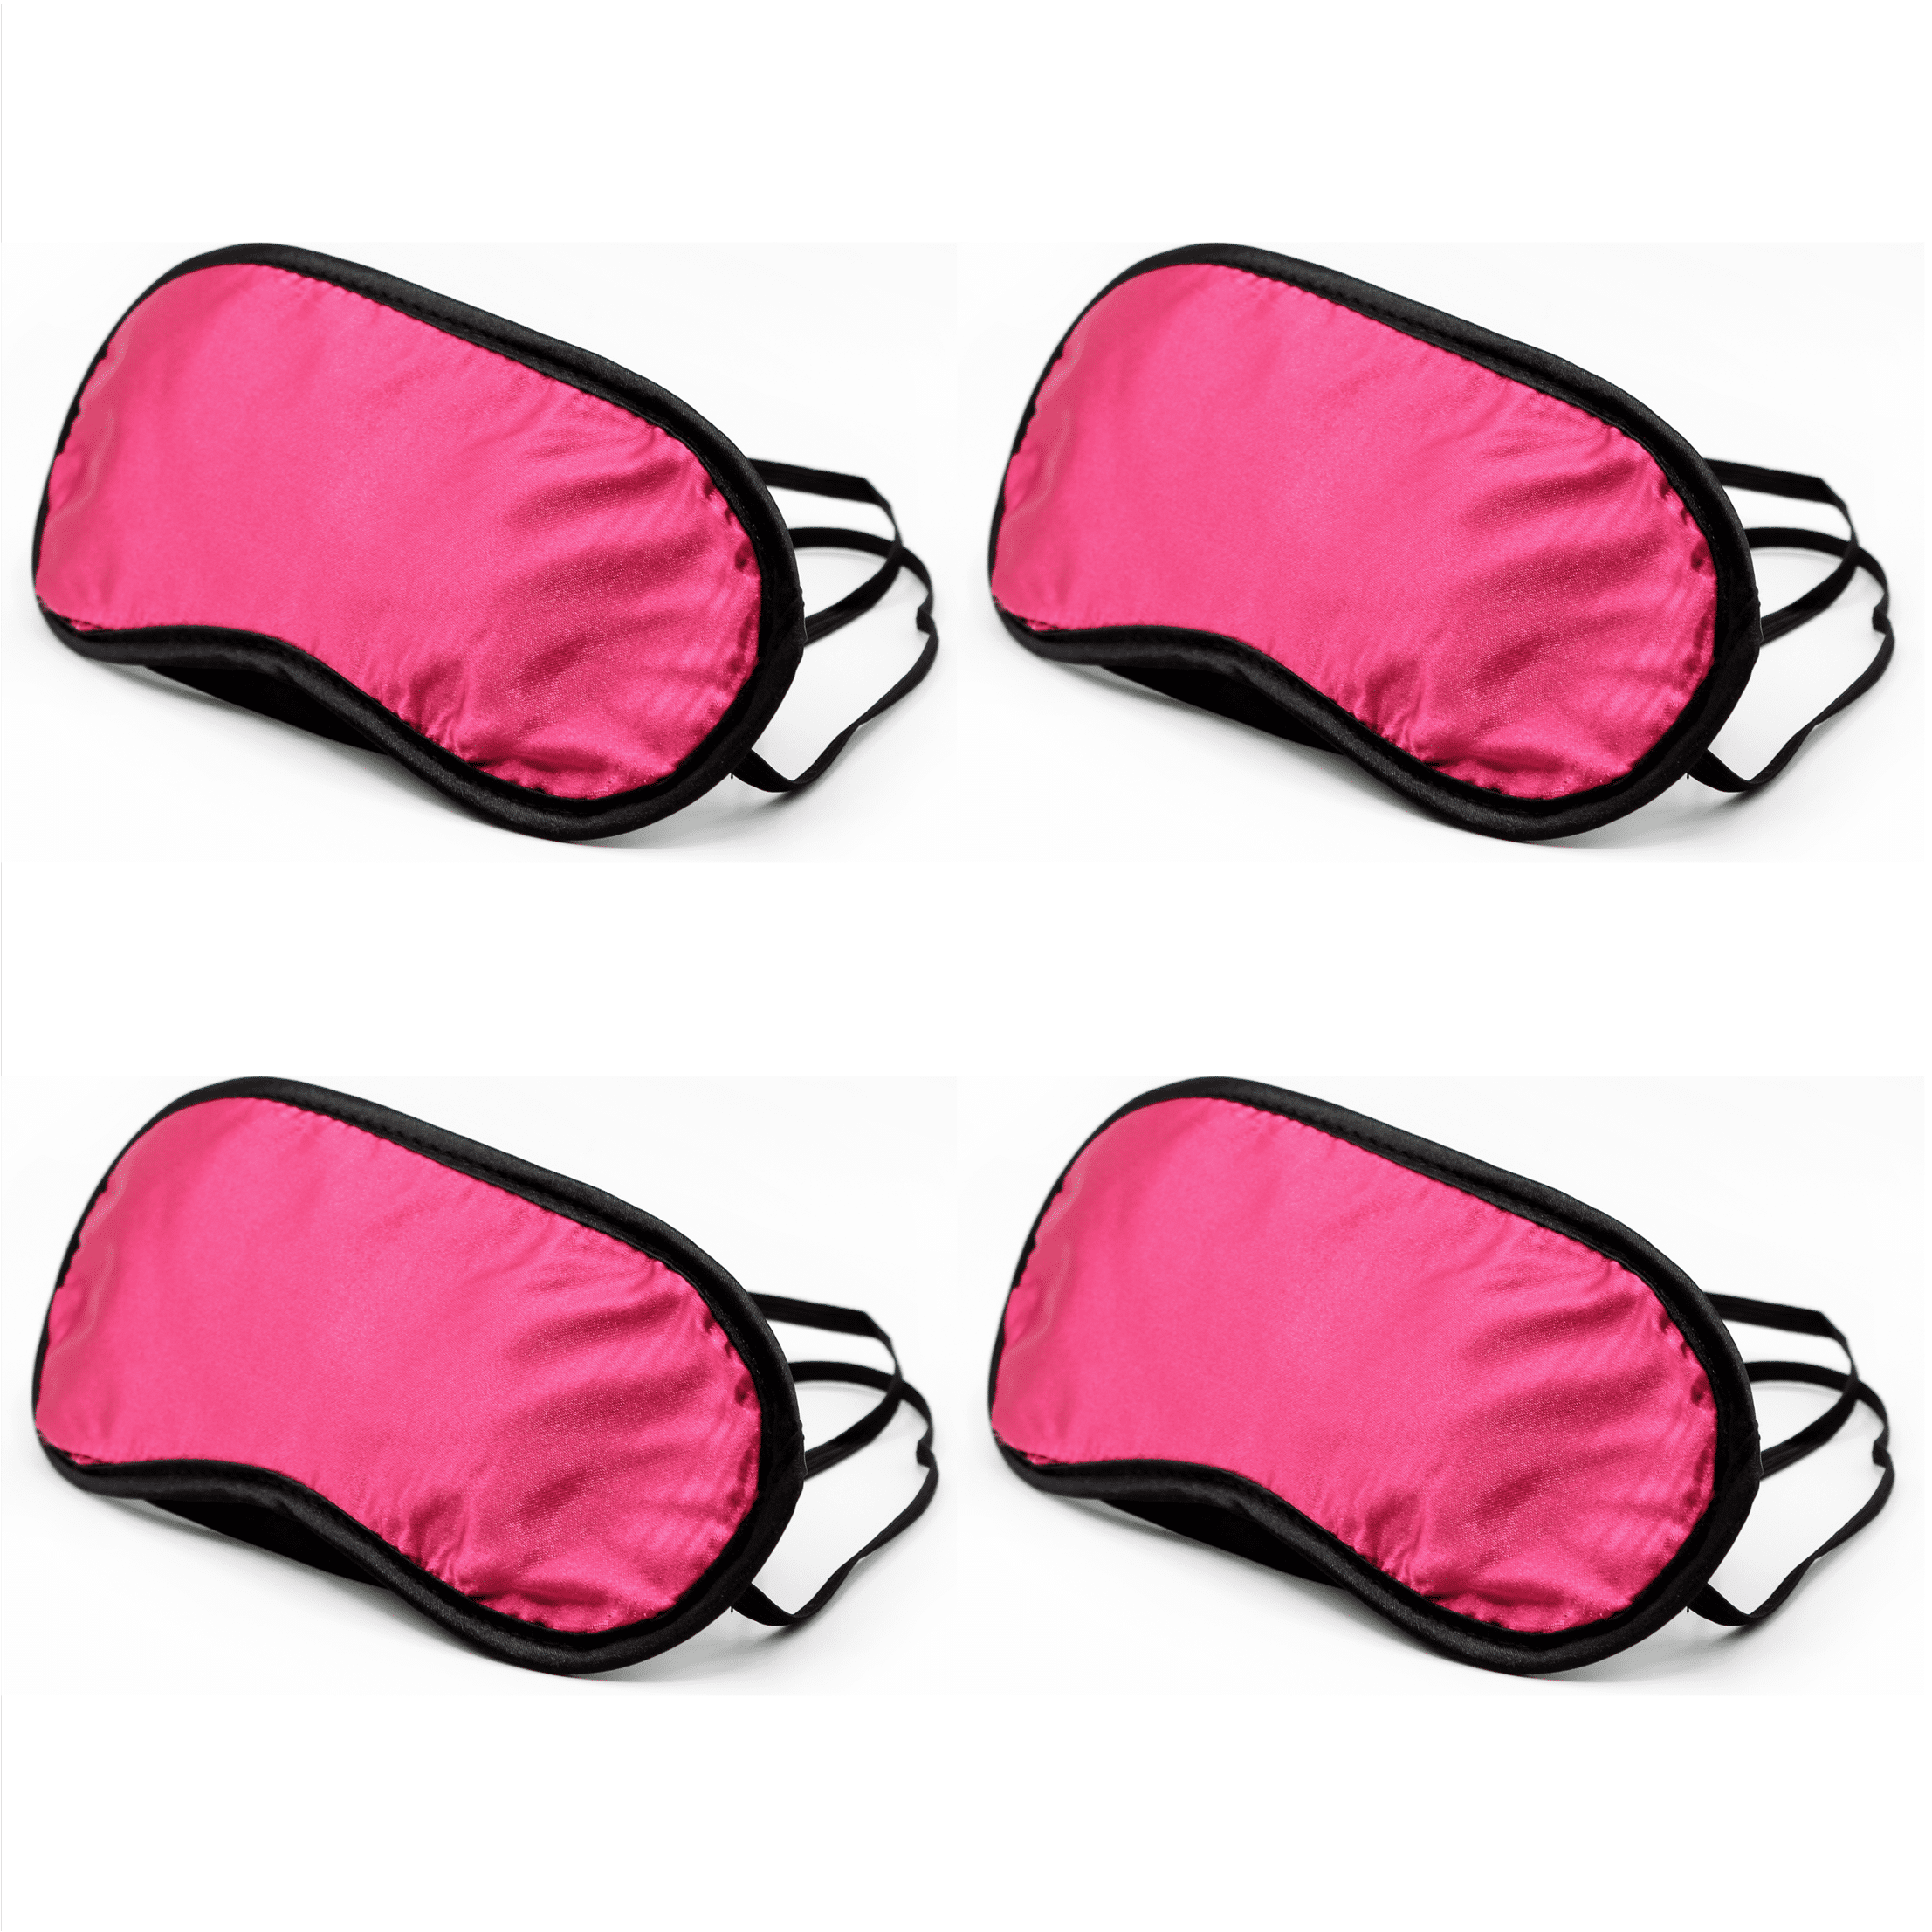 Dream Essentials Snooz Silky Soft Satin Sleep Mask Value Pack 4 Eye Masks Pink 4 Pack 